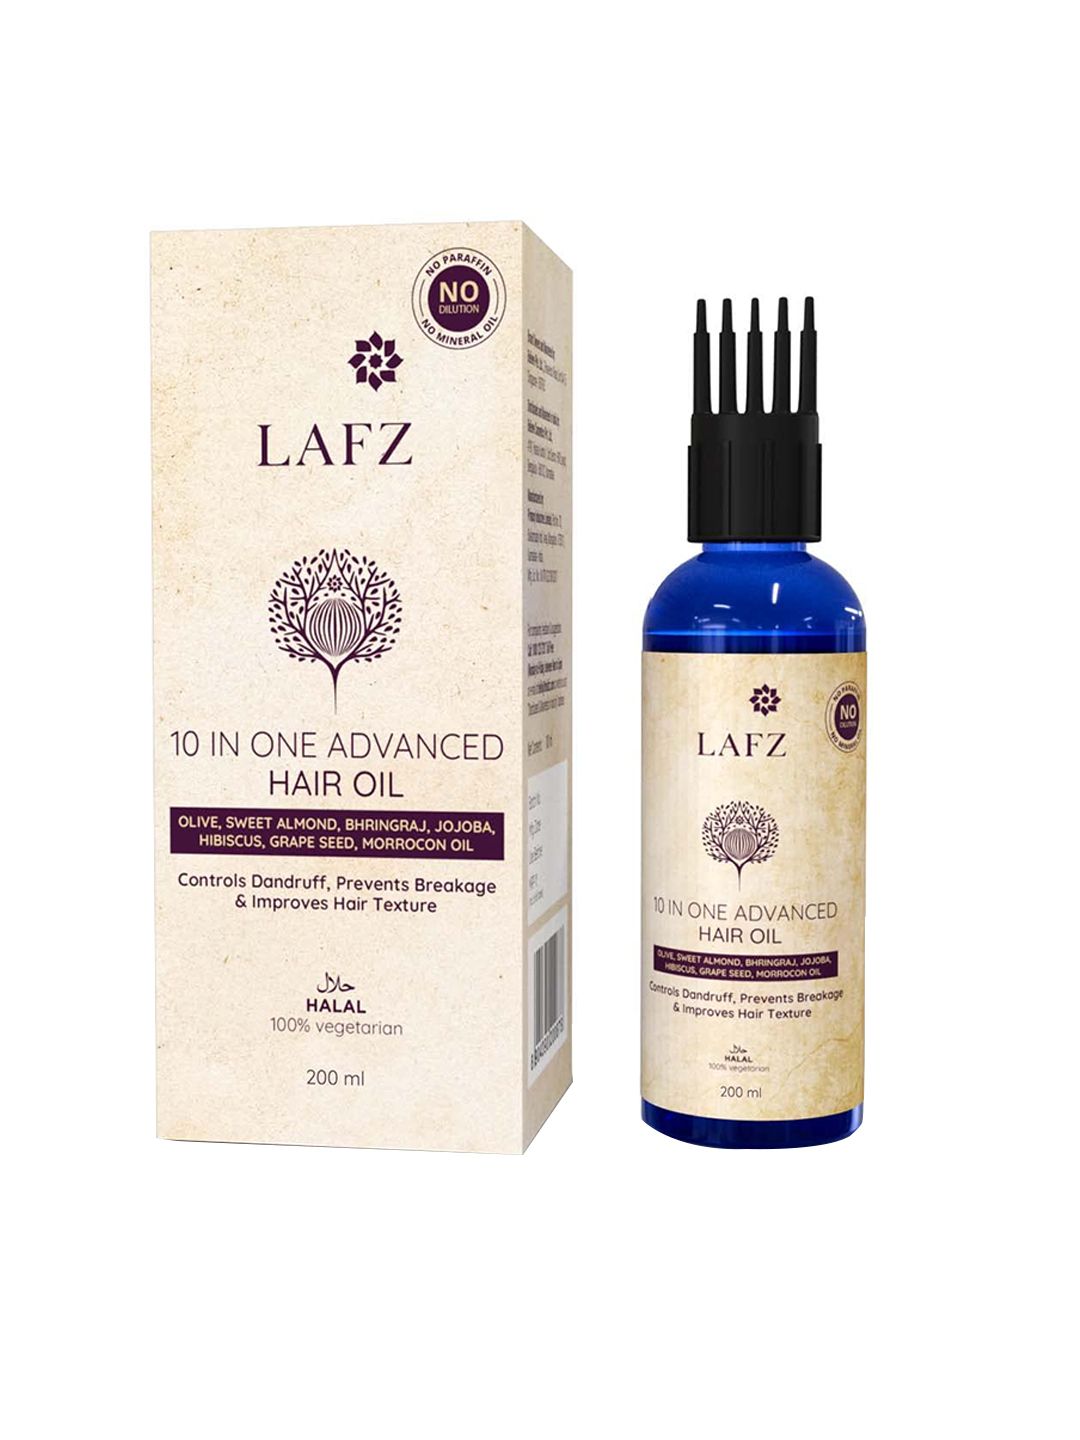 LAFZ Unisex 10-In-1 Advanced Hair Oil 200 ml Price in India